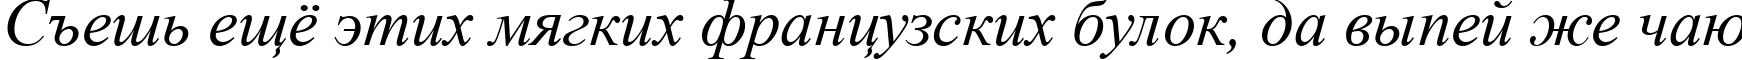 Пример написания шрифтом Times New Roman Italic текста на русском